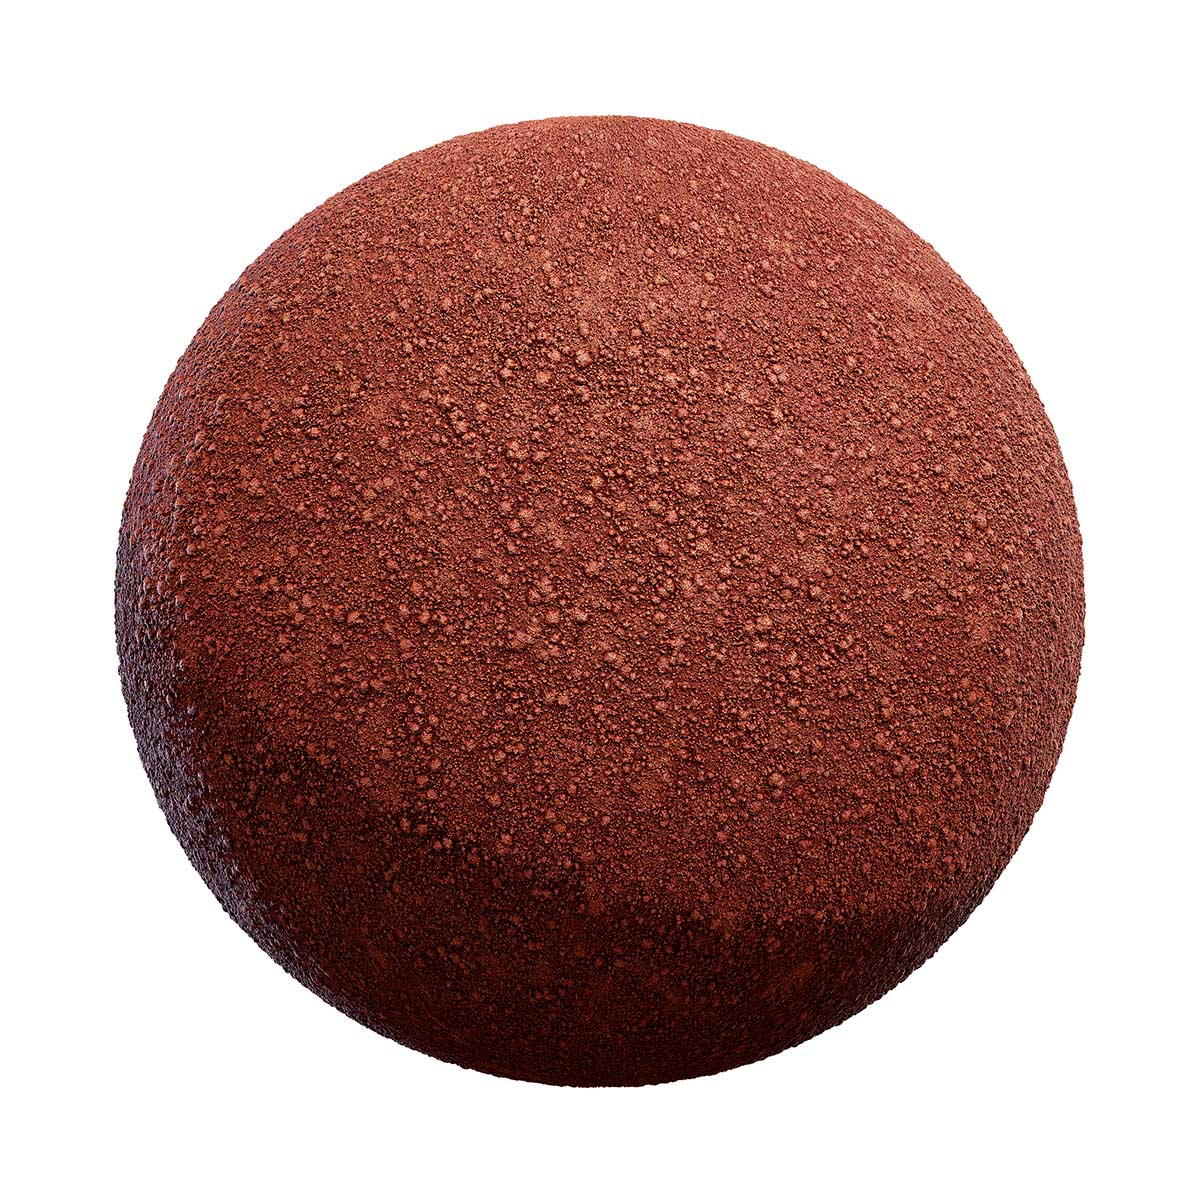 Red Clay Ground PBR Texture